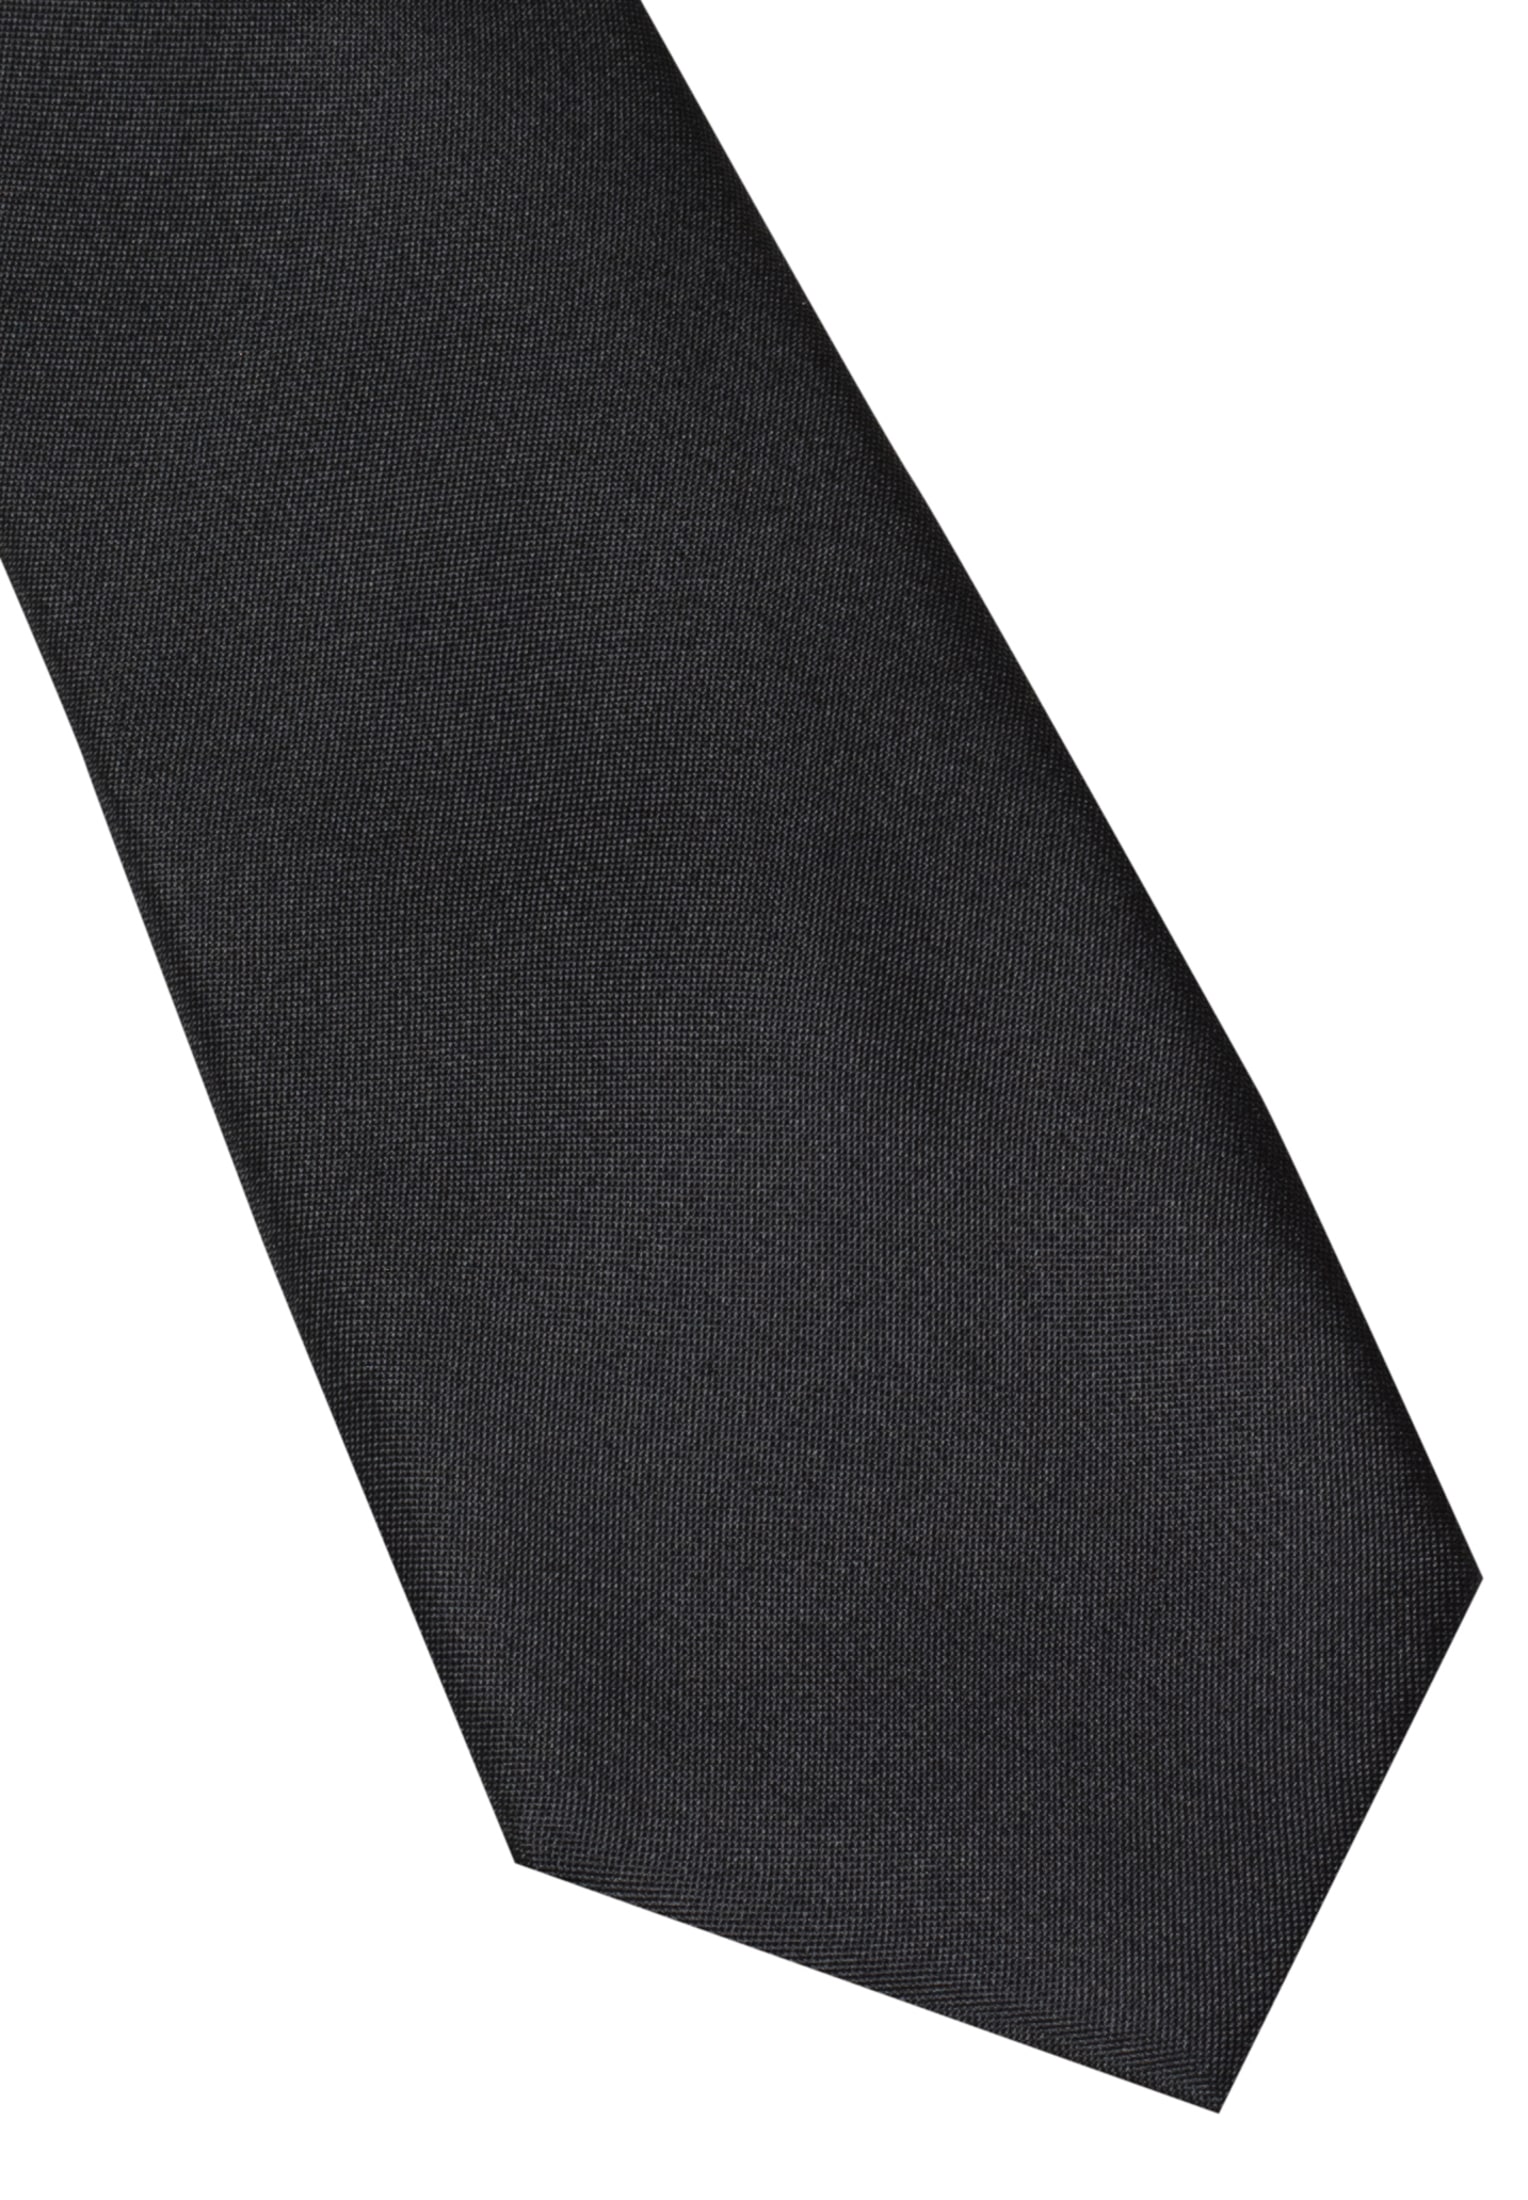 Krawatte in silber unifarben | | | 142 1AC00025-03-11-142 silber